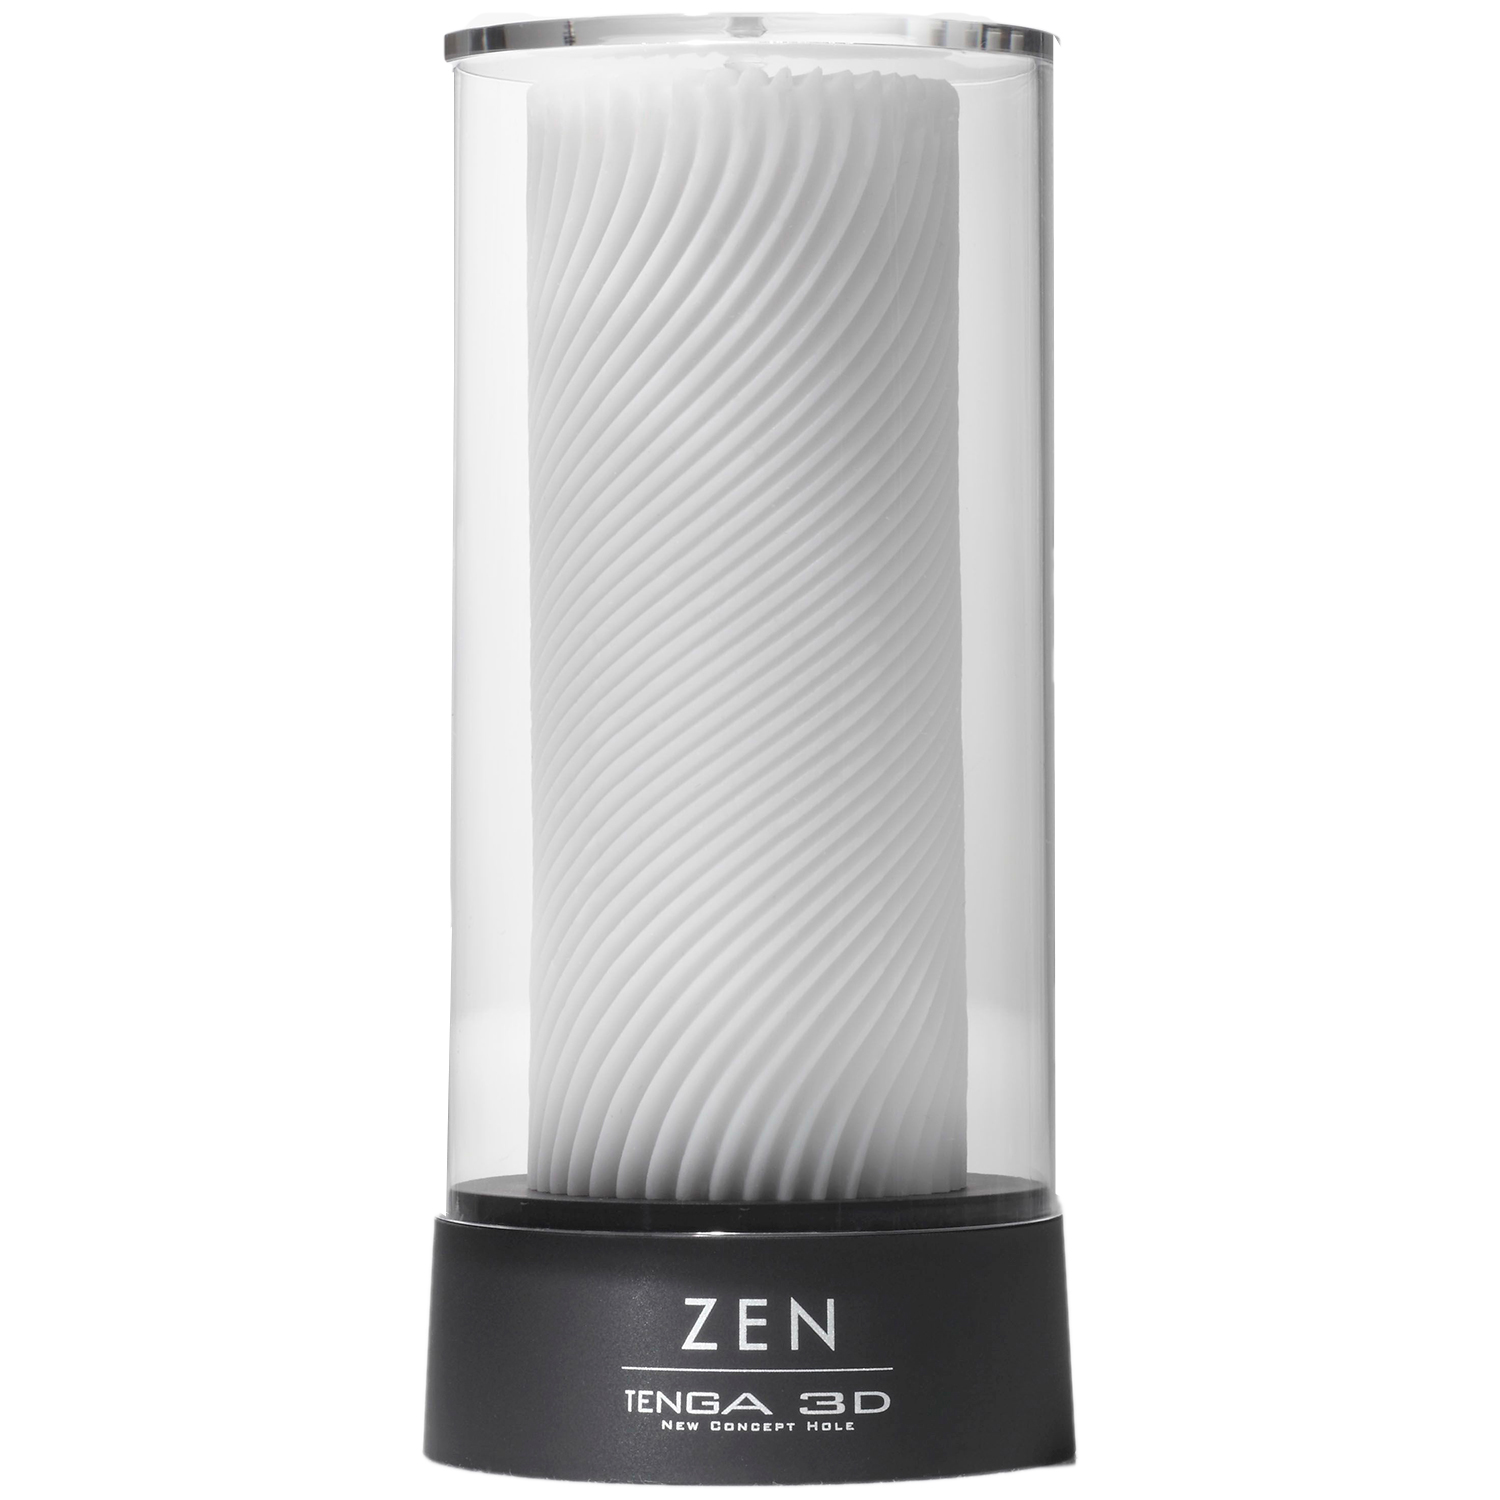 TENGA 3D Zen Onaniprodukt - White thumbnail